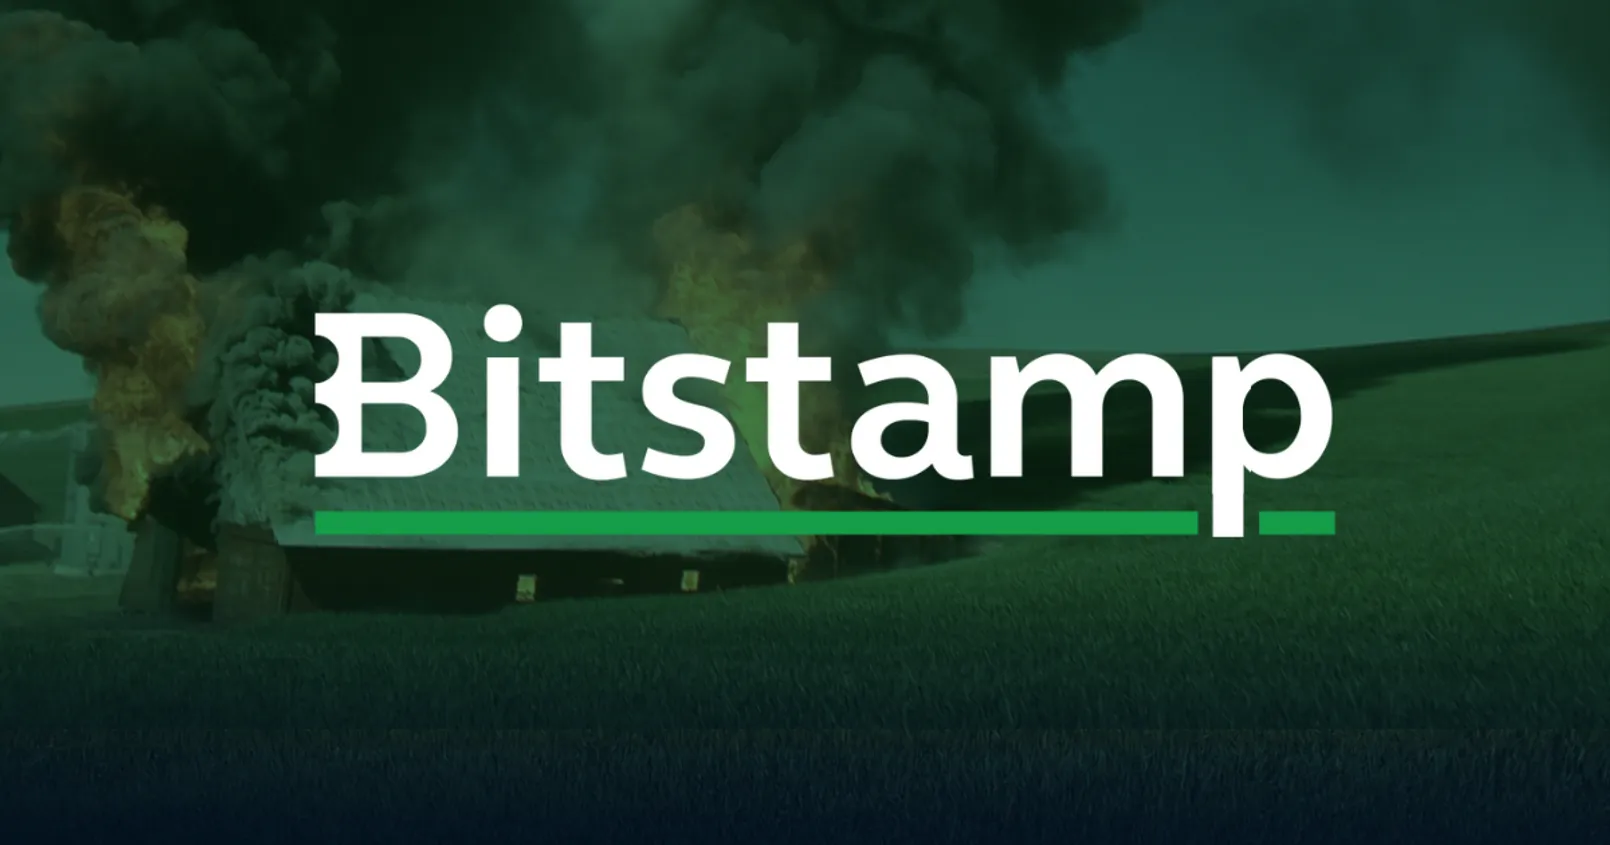 'Bitstamp' ประกาศยุติบริการ Staking ในสหรัฐฯ รับประเด็นกฎหมายยังไม่นิ่ง